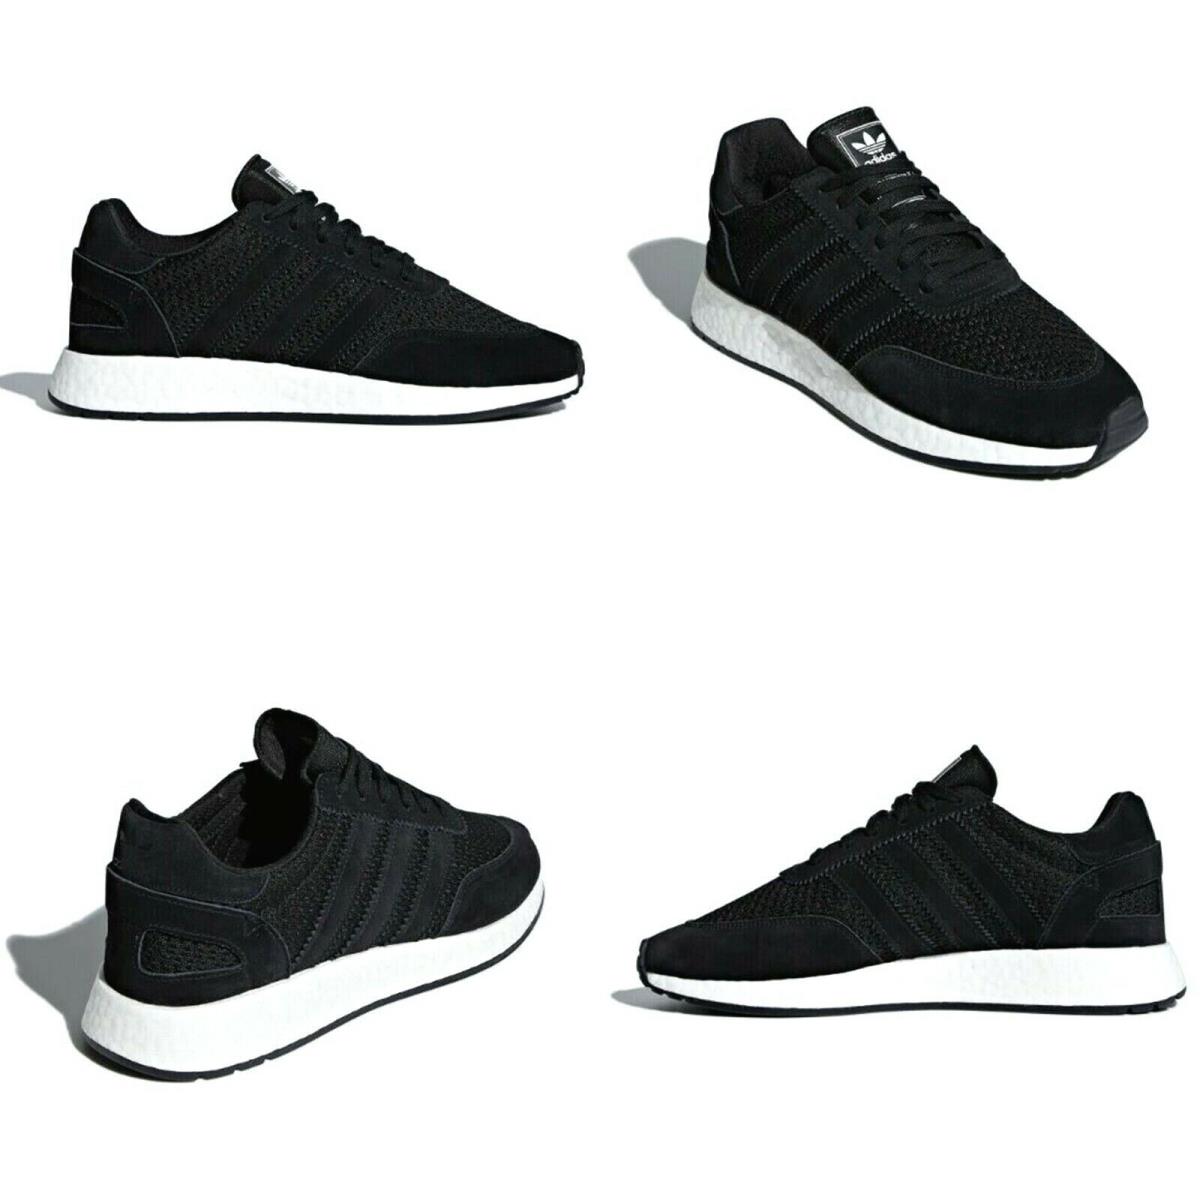 Adidas I-5923 Runner Shoes Black / Black / White Mens Size 5 US D96608